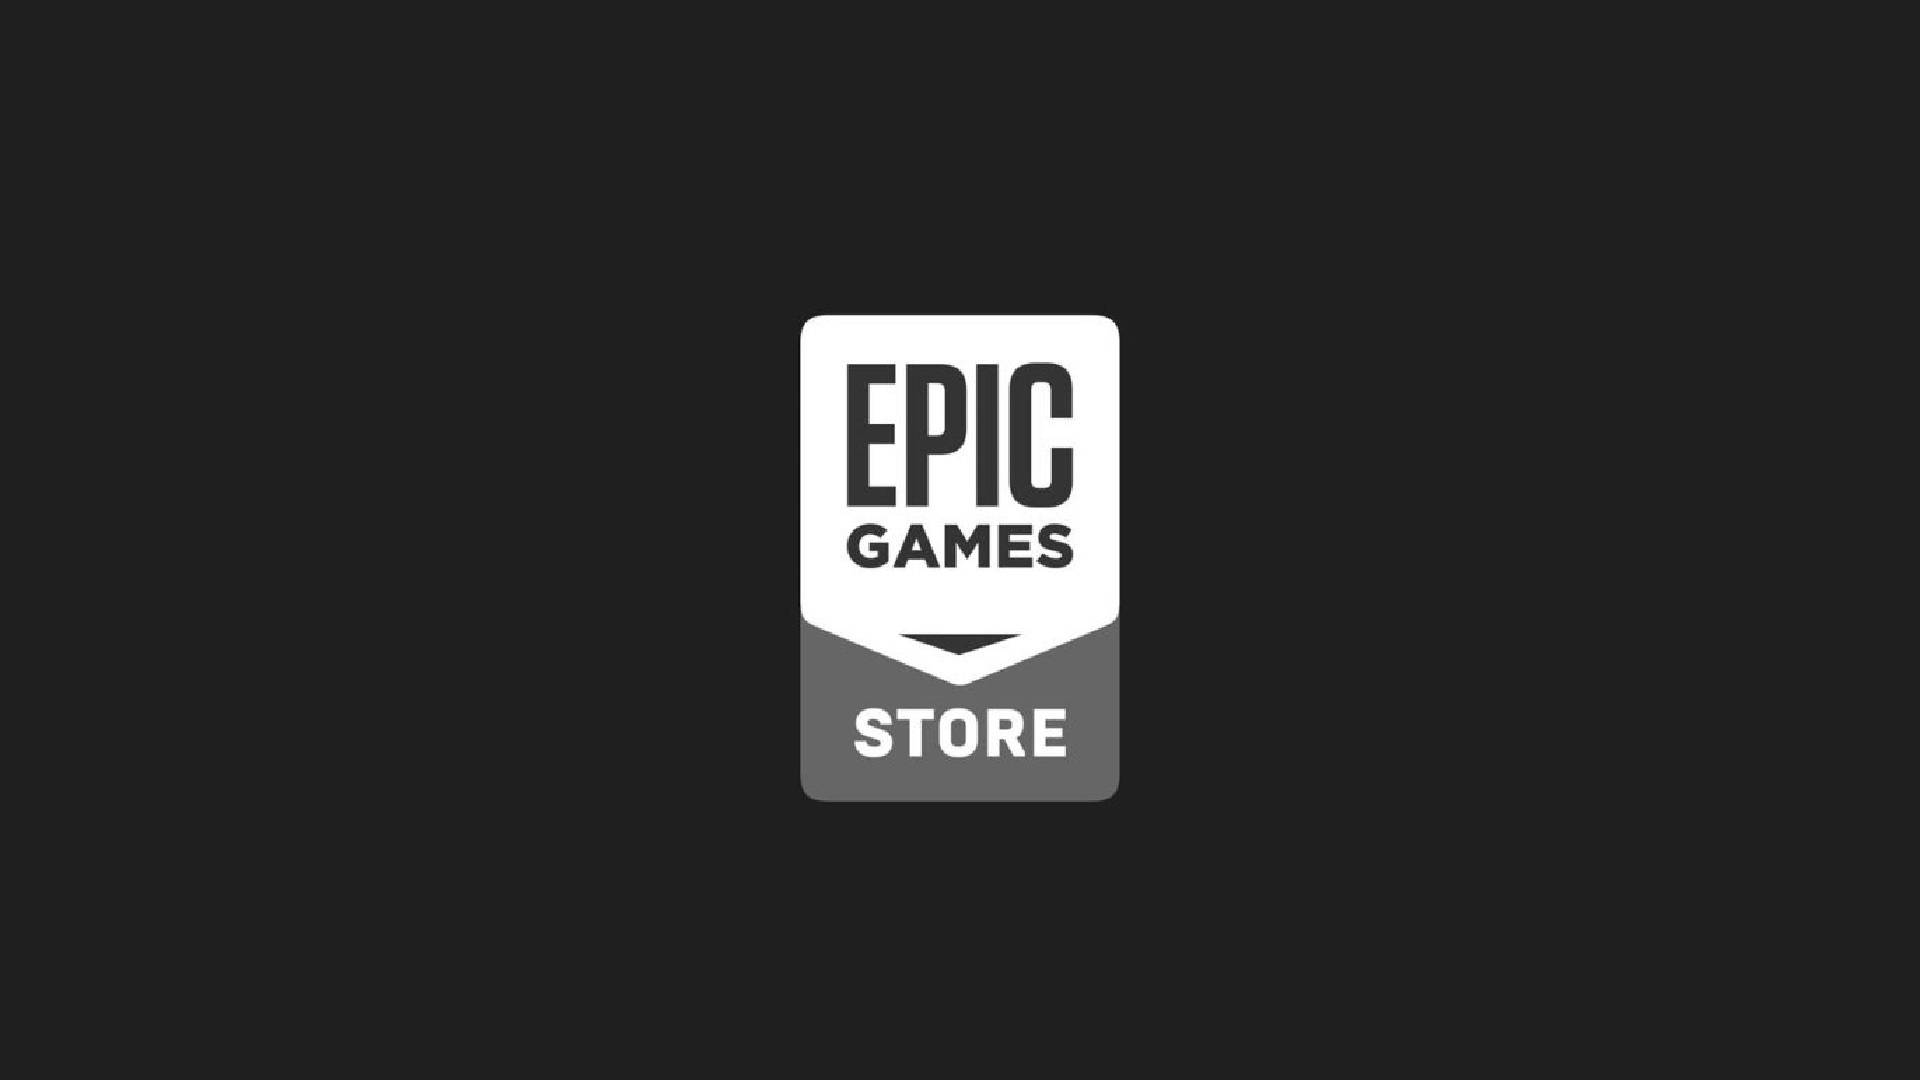 Epic Games Store logo